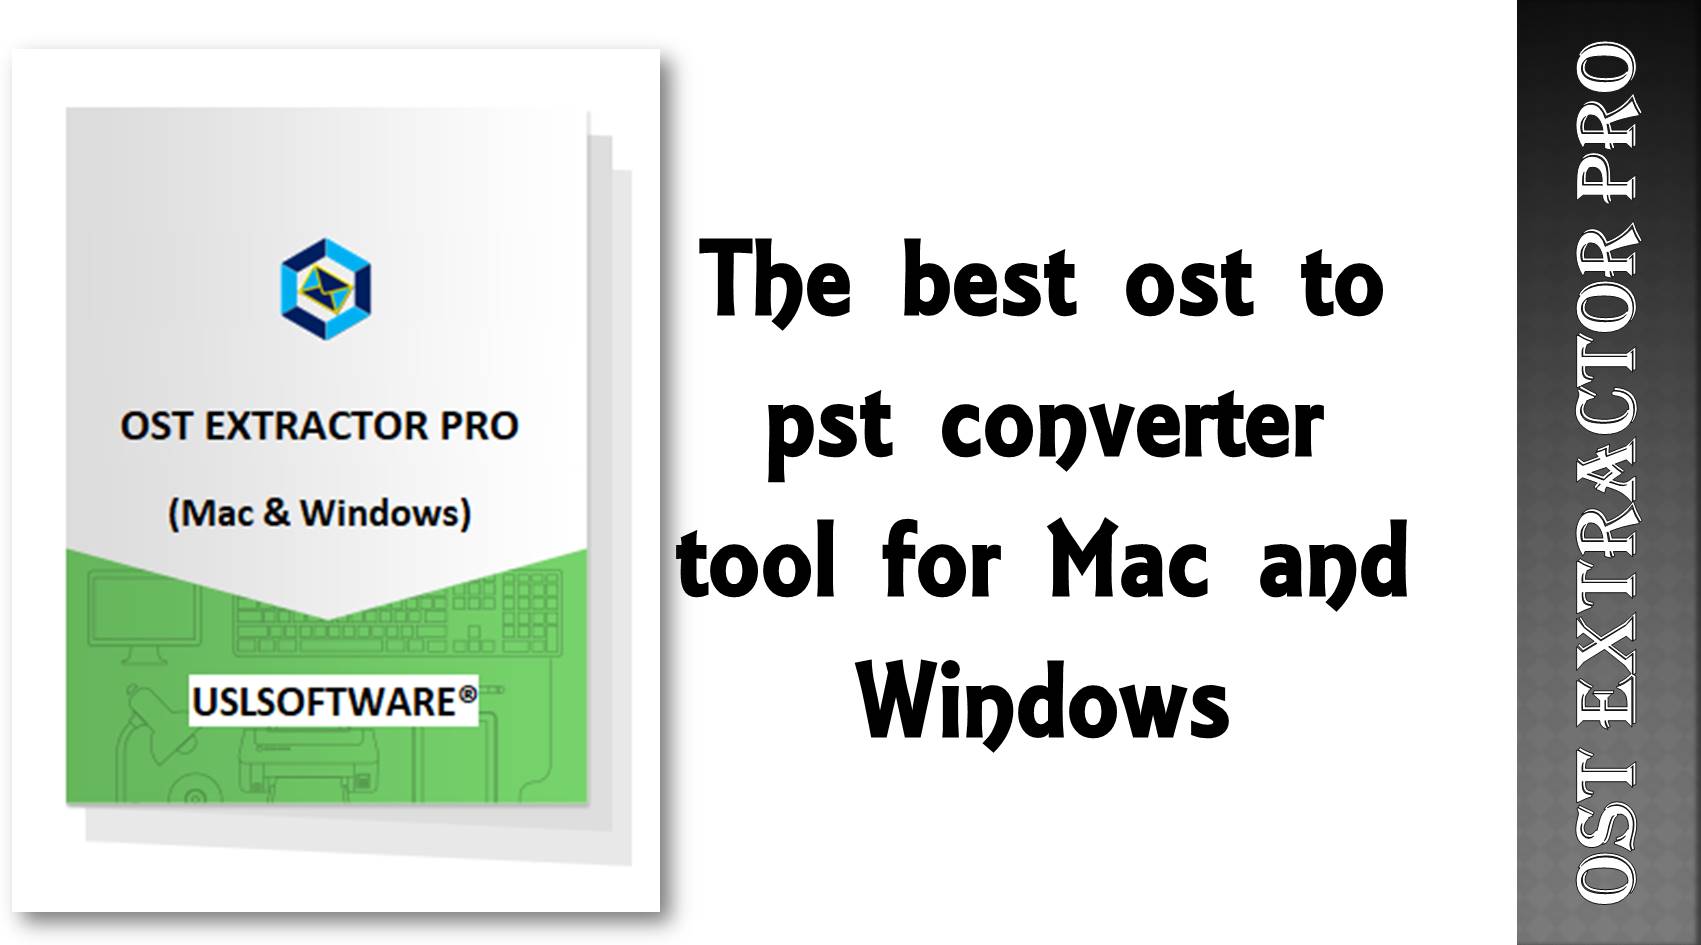 microsoft wordpress for mac